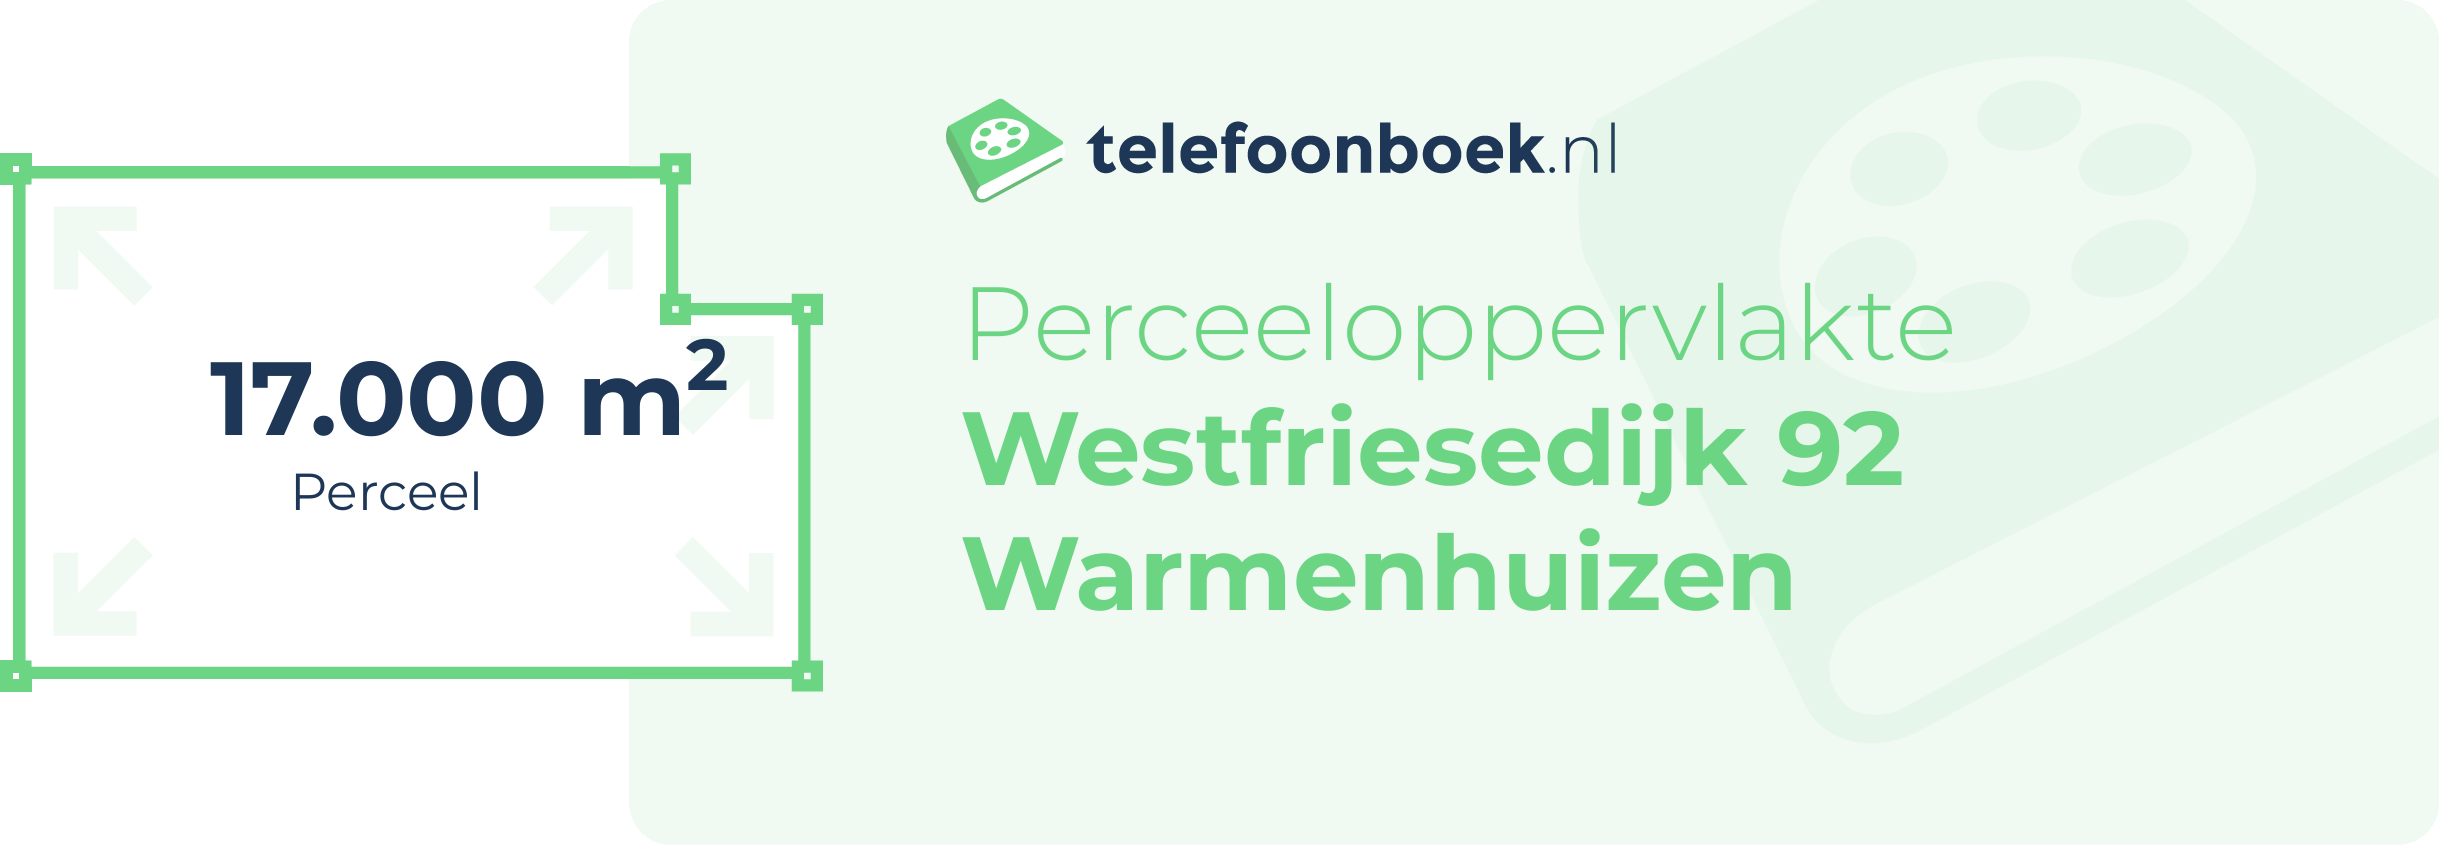 Perceeloppervlakte Westfriesedijk 92 Warmenhuizen